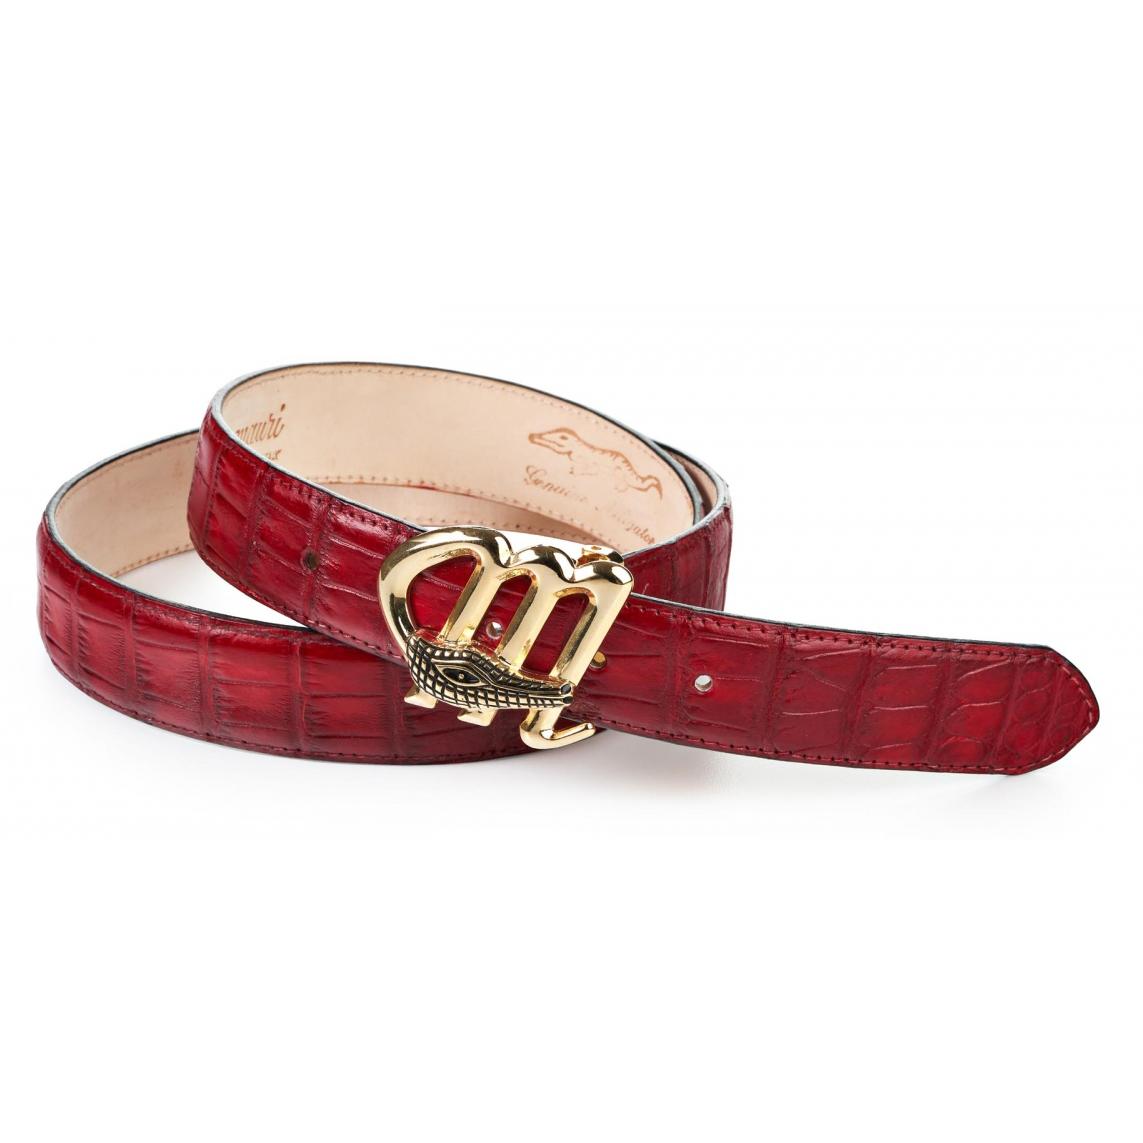 Hand-colored crocodile belt, red